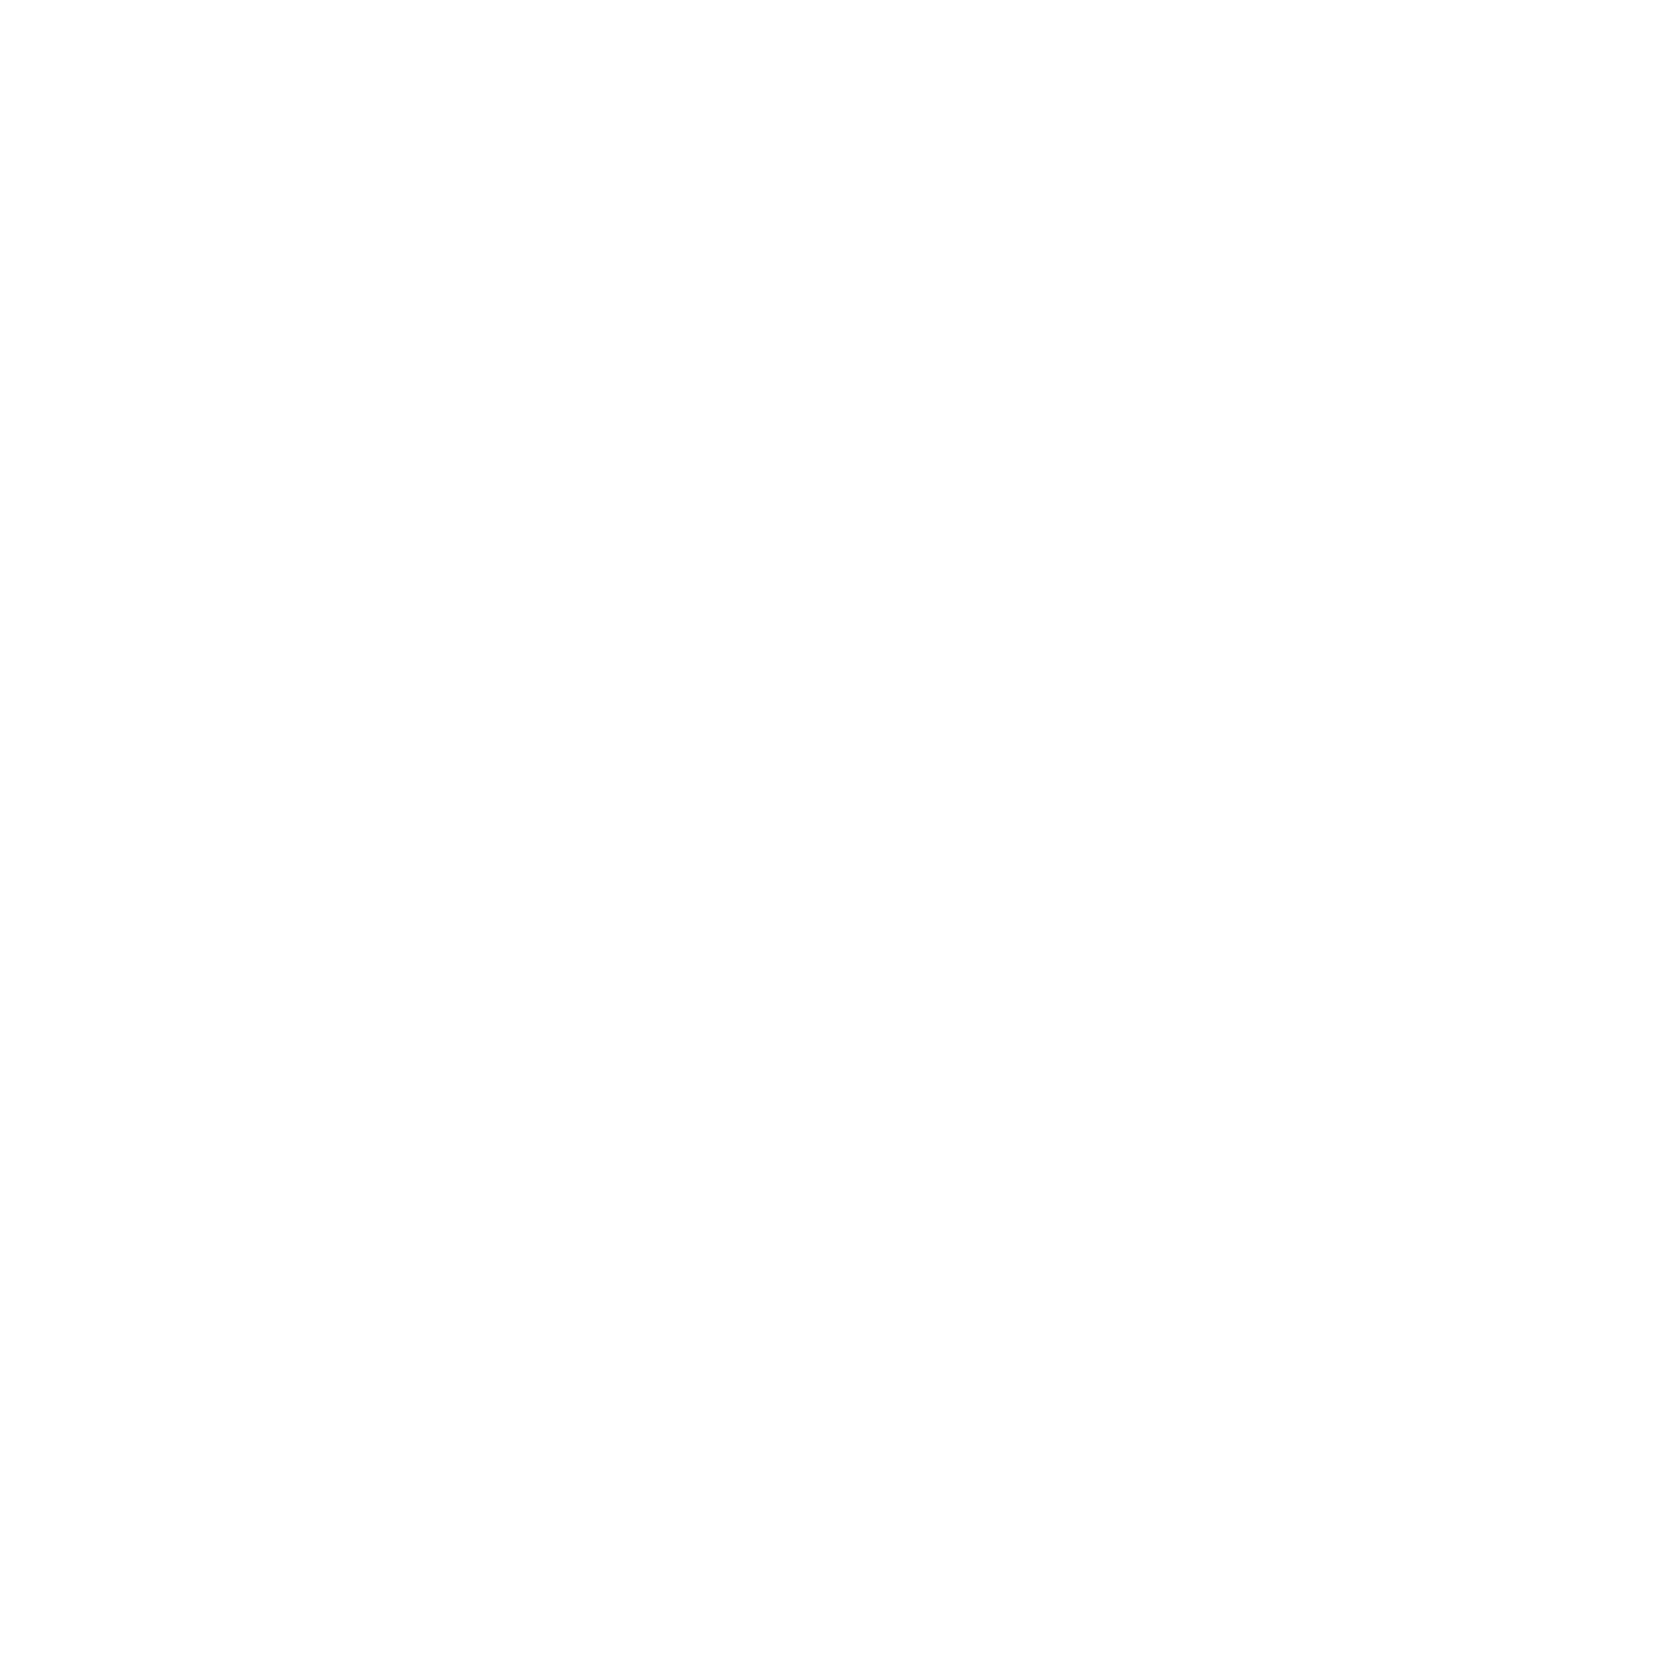 Джинсовка с рисунком Ирисы Ван Гог, вид сзади